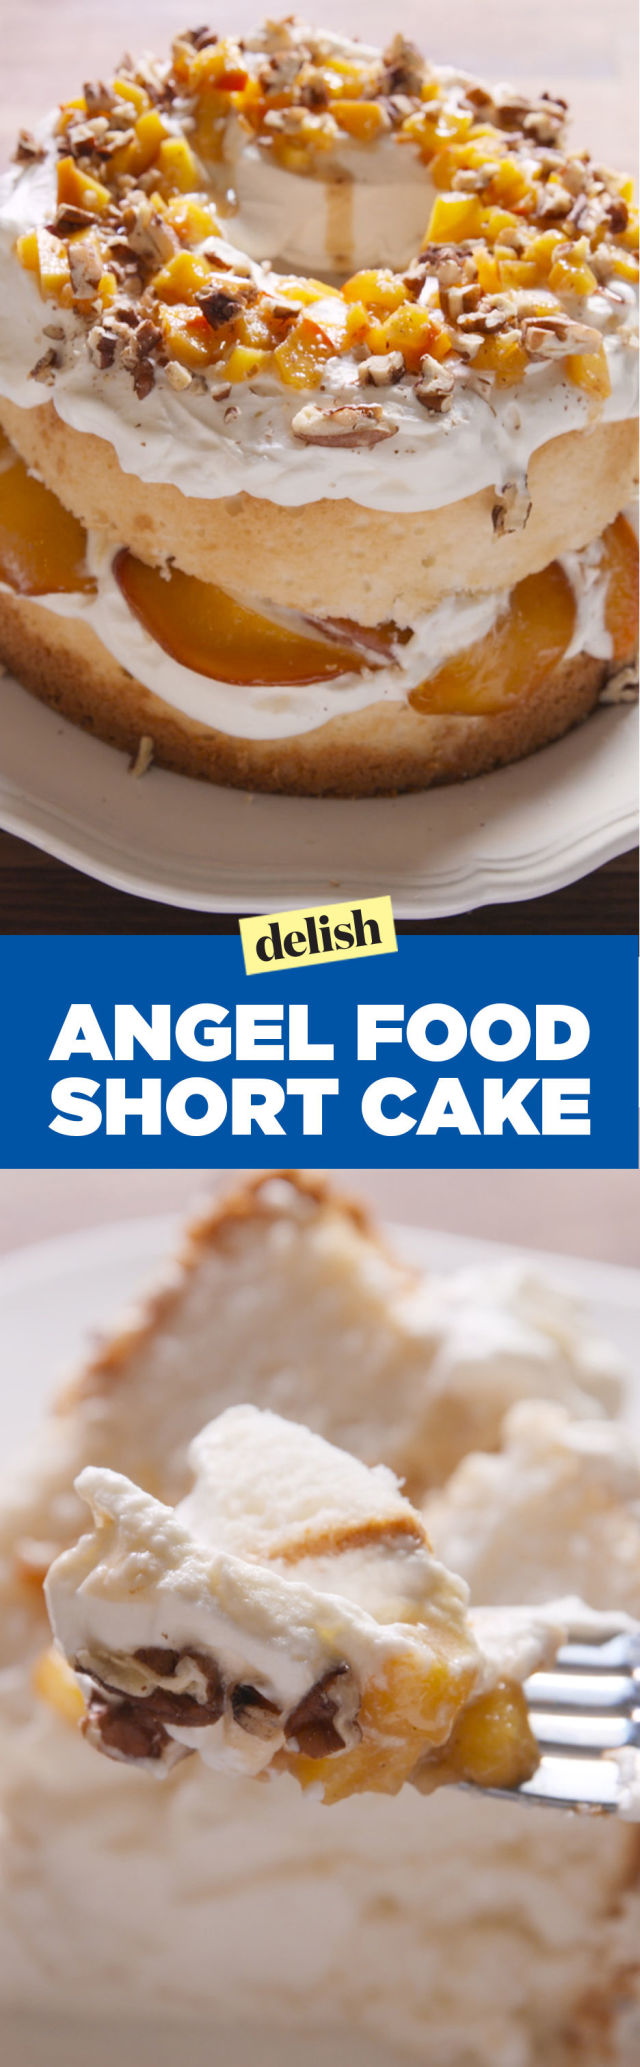 Angel Food Shortcake | Delish.com